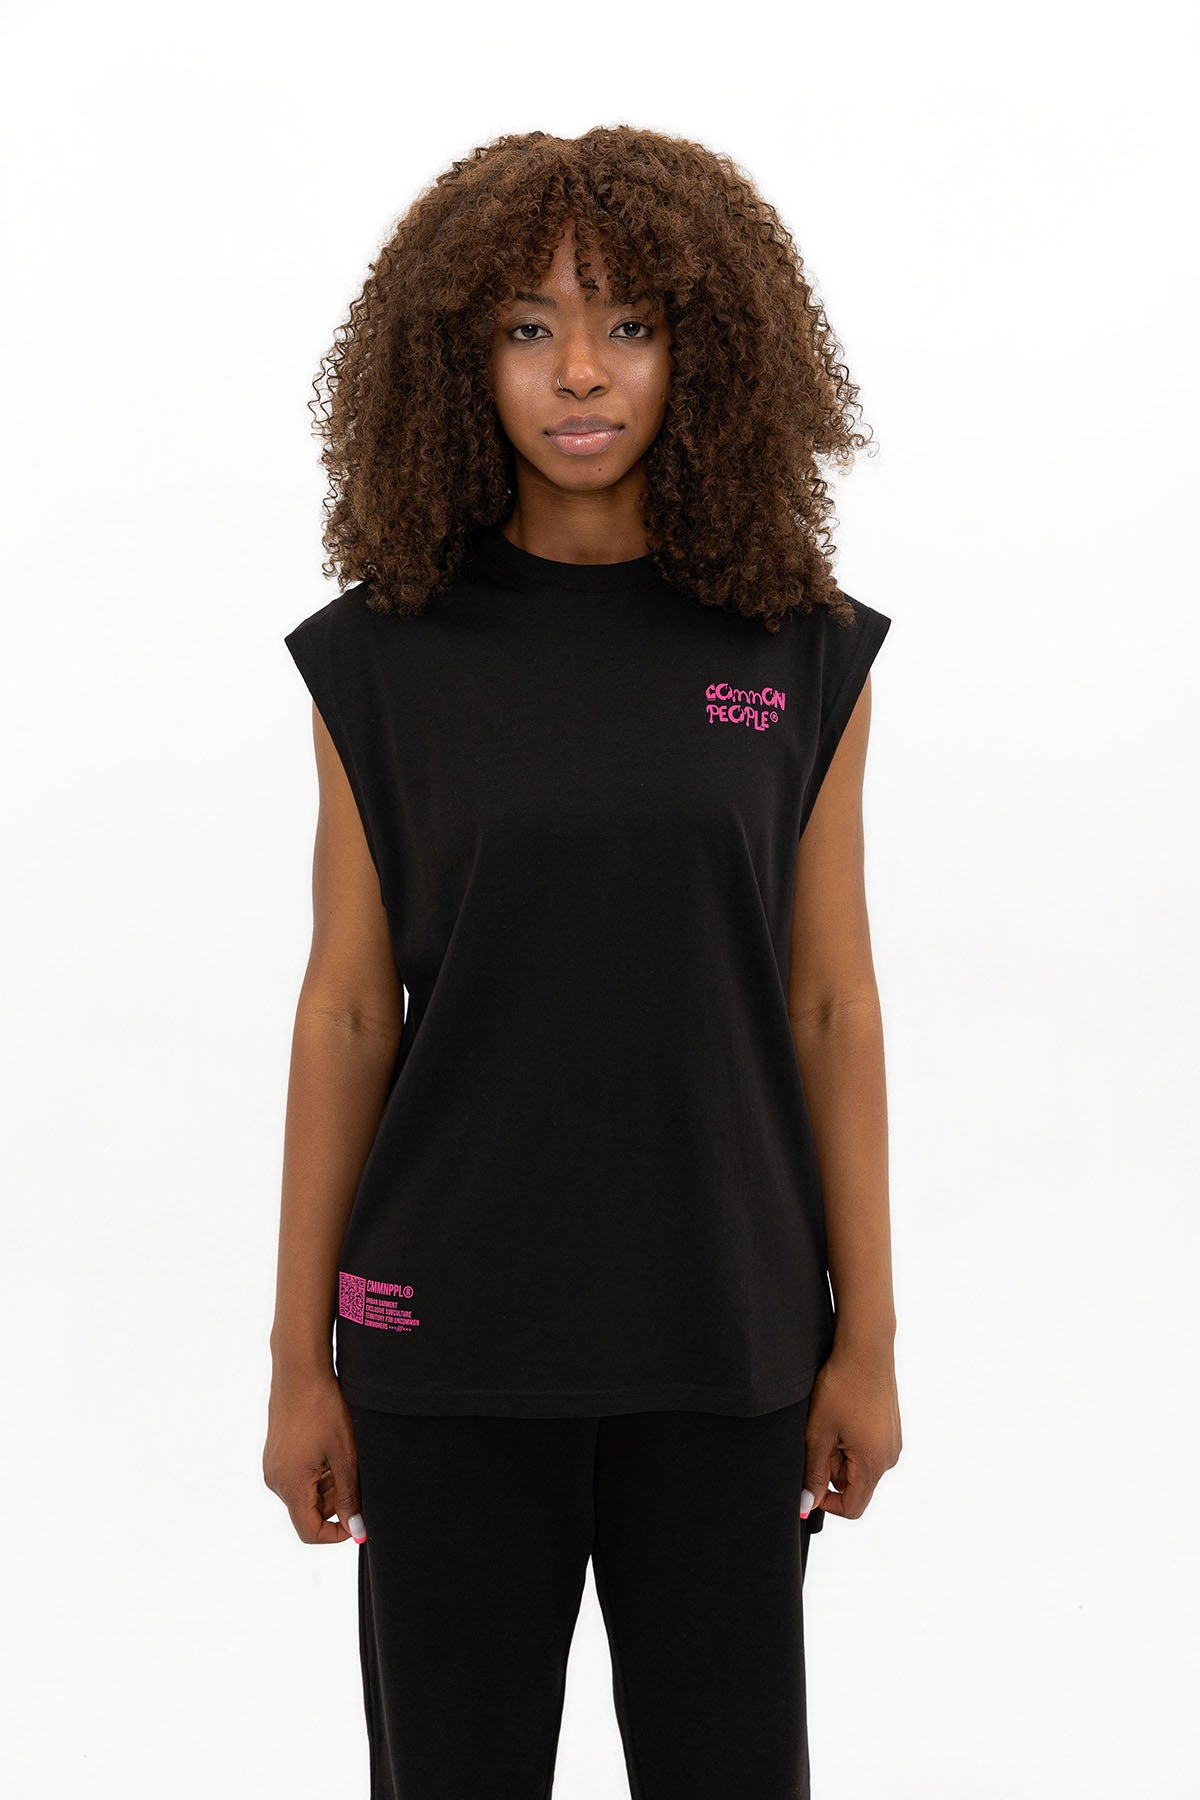 Feeling - Black - Sleeveless Unisex T-shirt